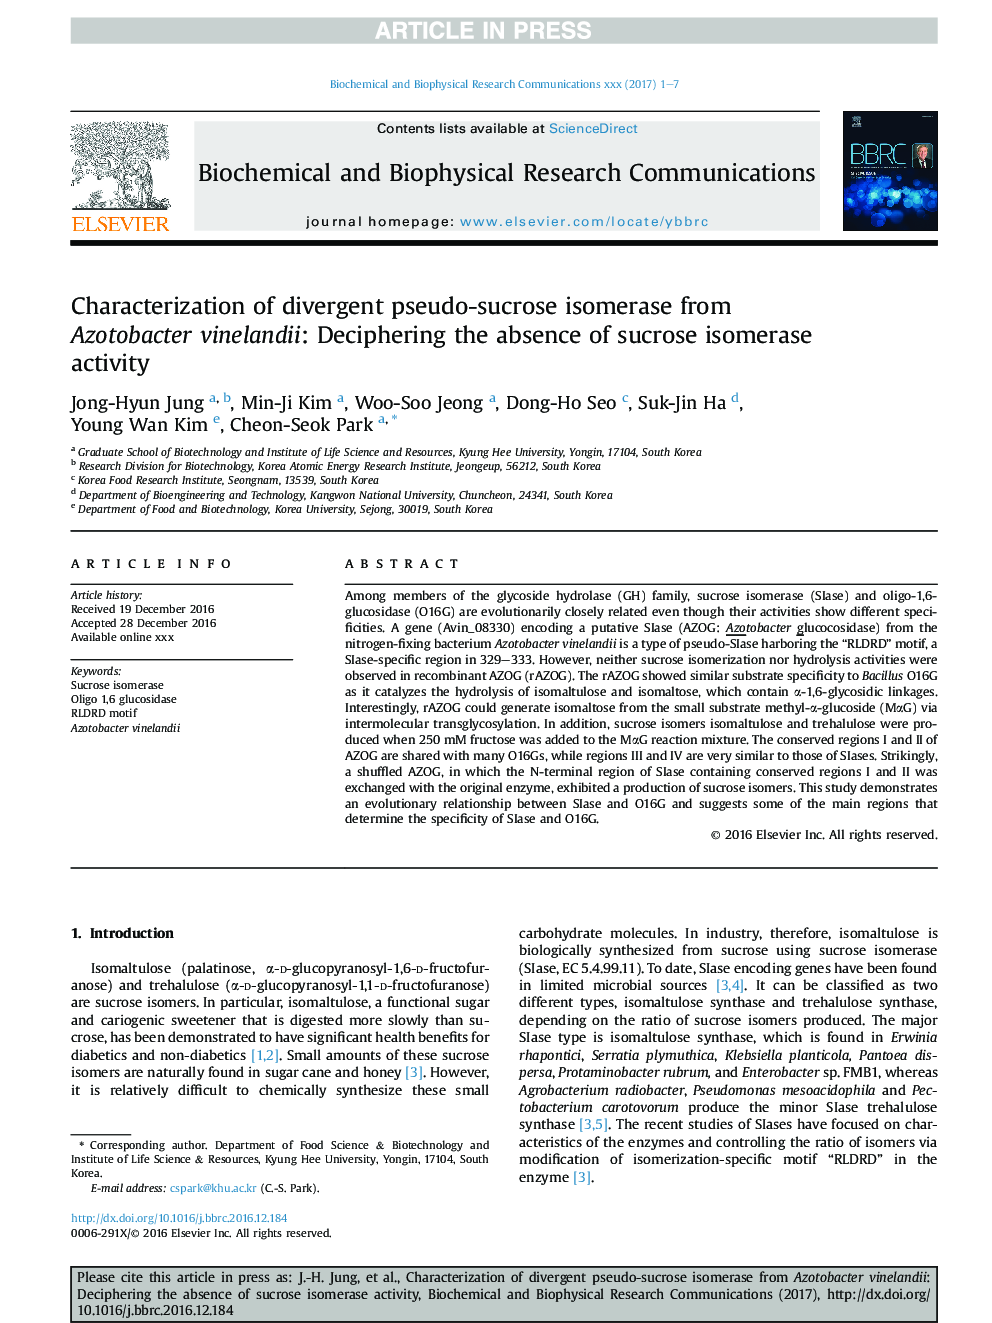 Characterization of divergent pseudo-sucrose isomerase from Azotobacter vinelandii: Deciphering the absence of sucrose isomerase activity